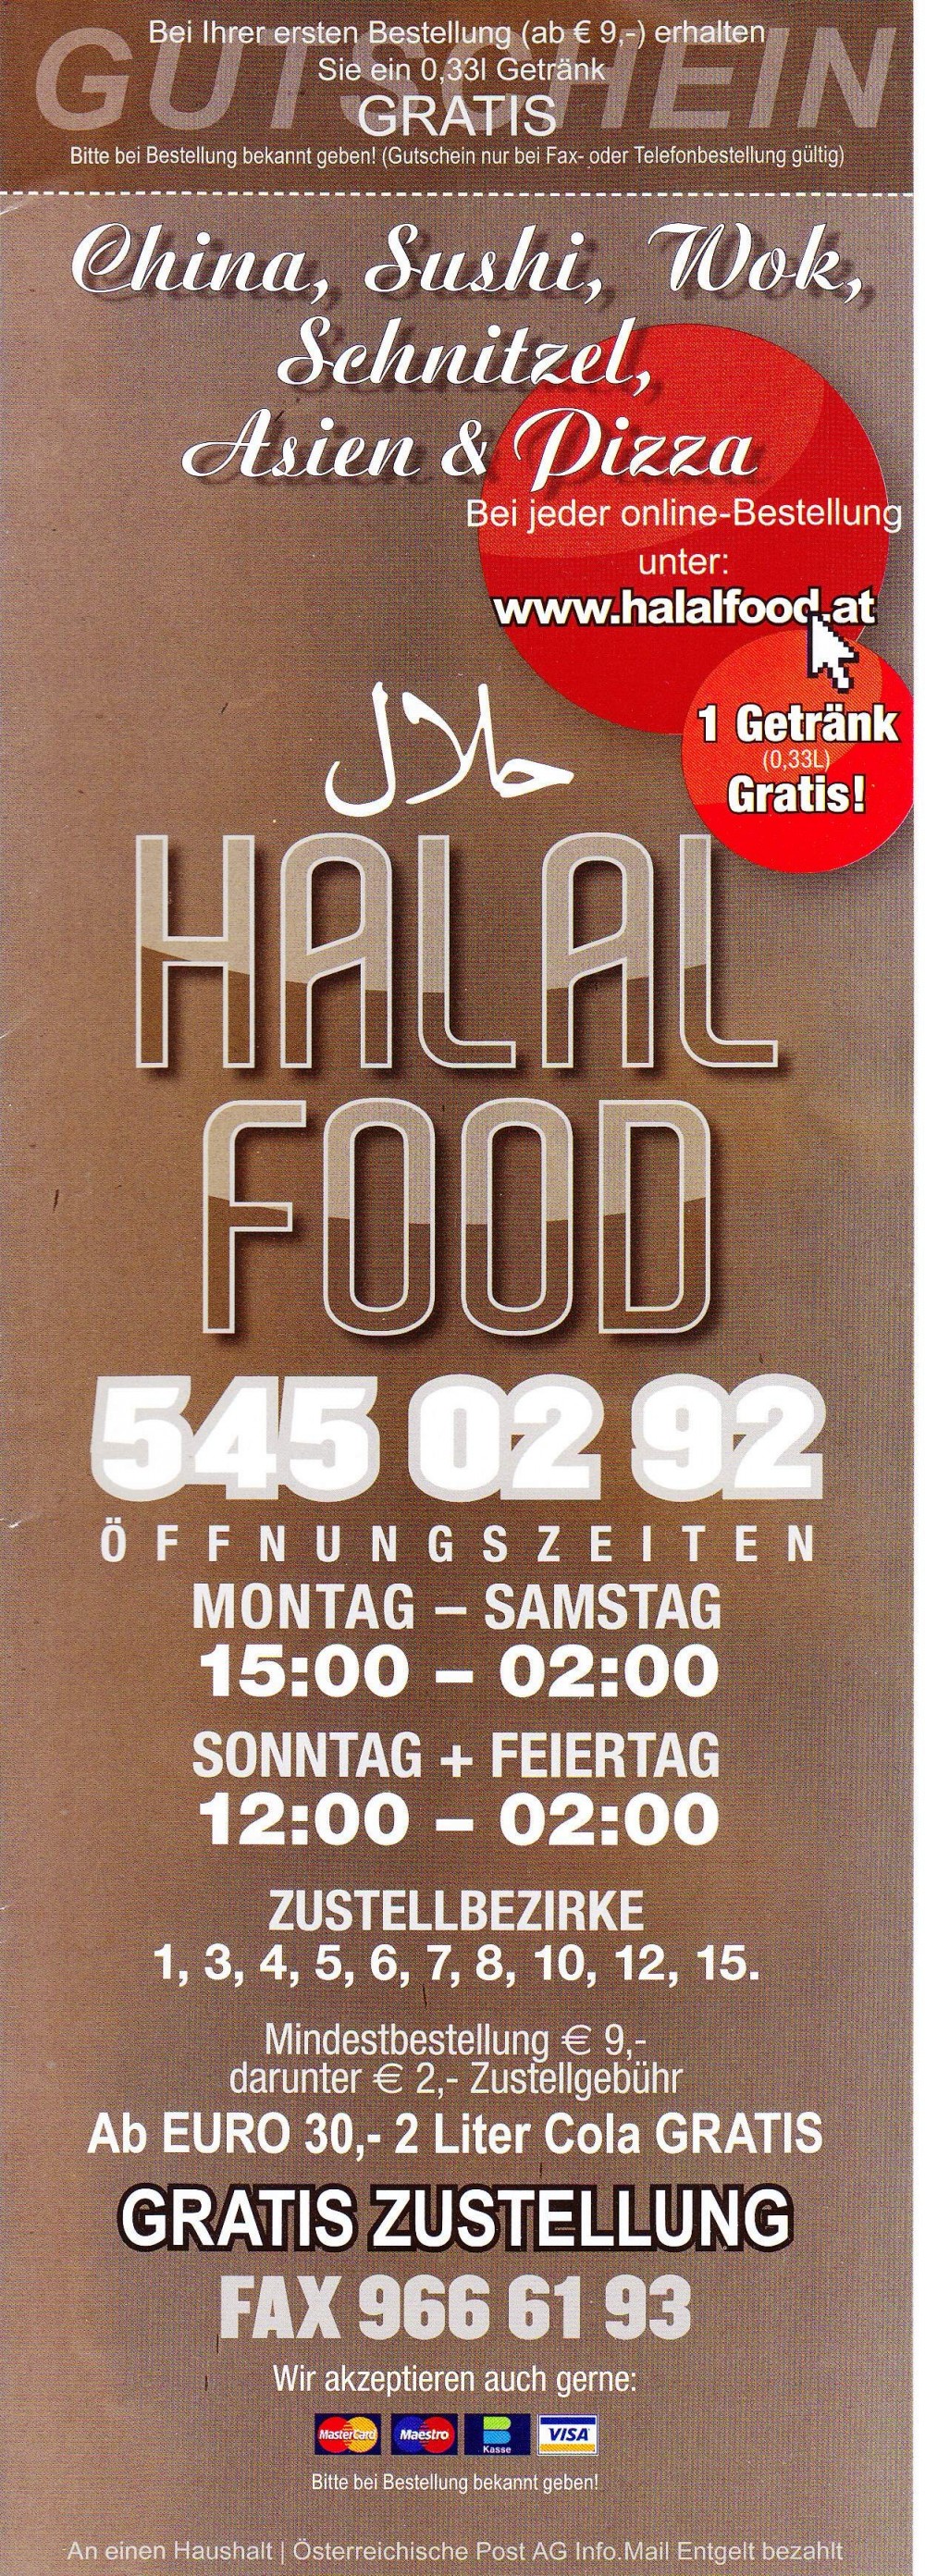 Halal Food Flyer Seite 1 - Halal Food - Wien